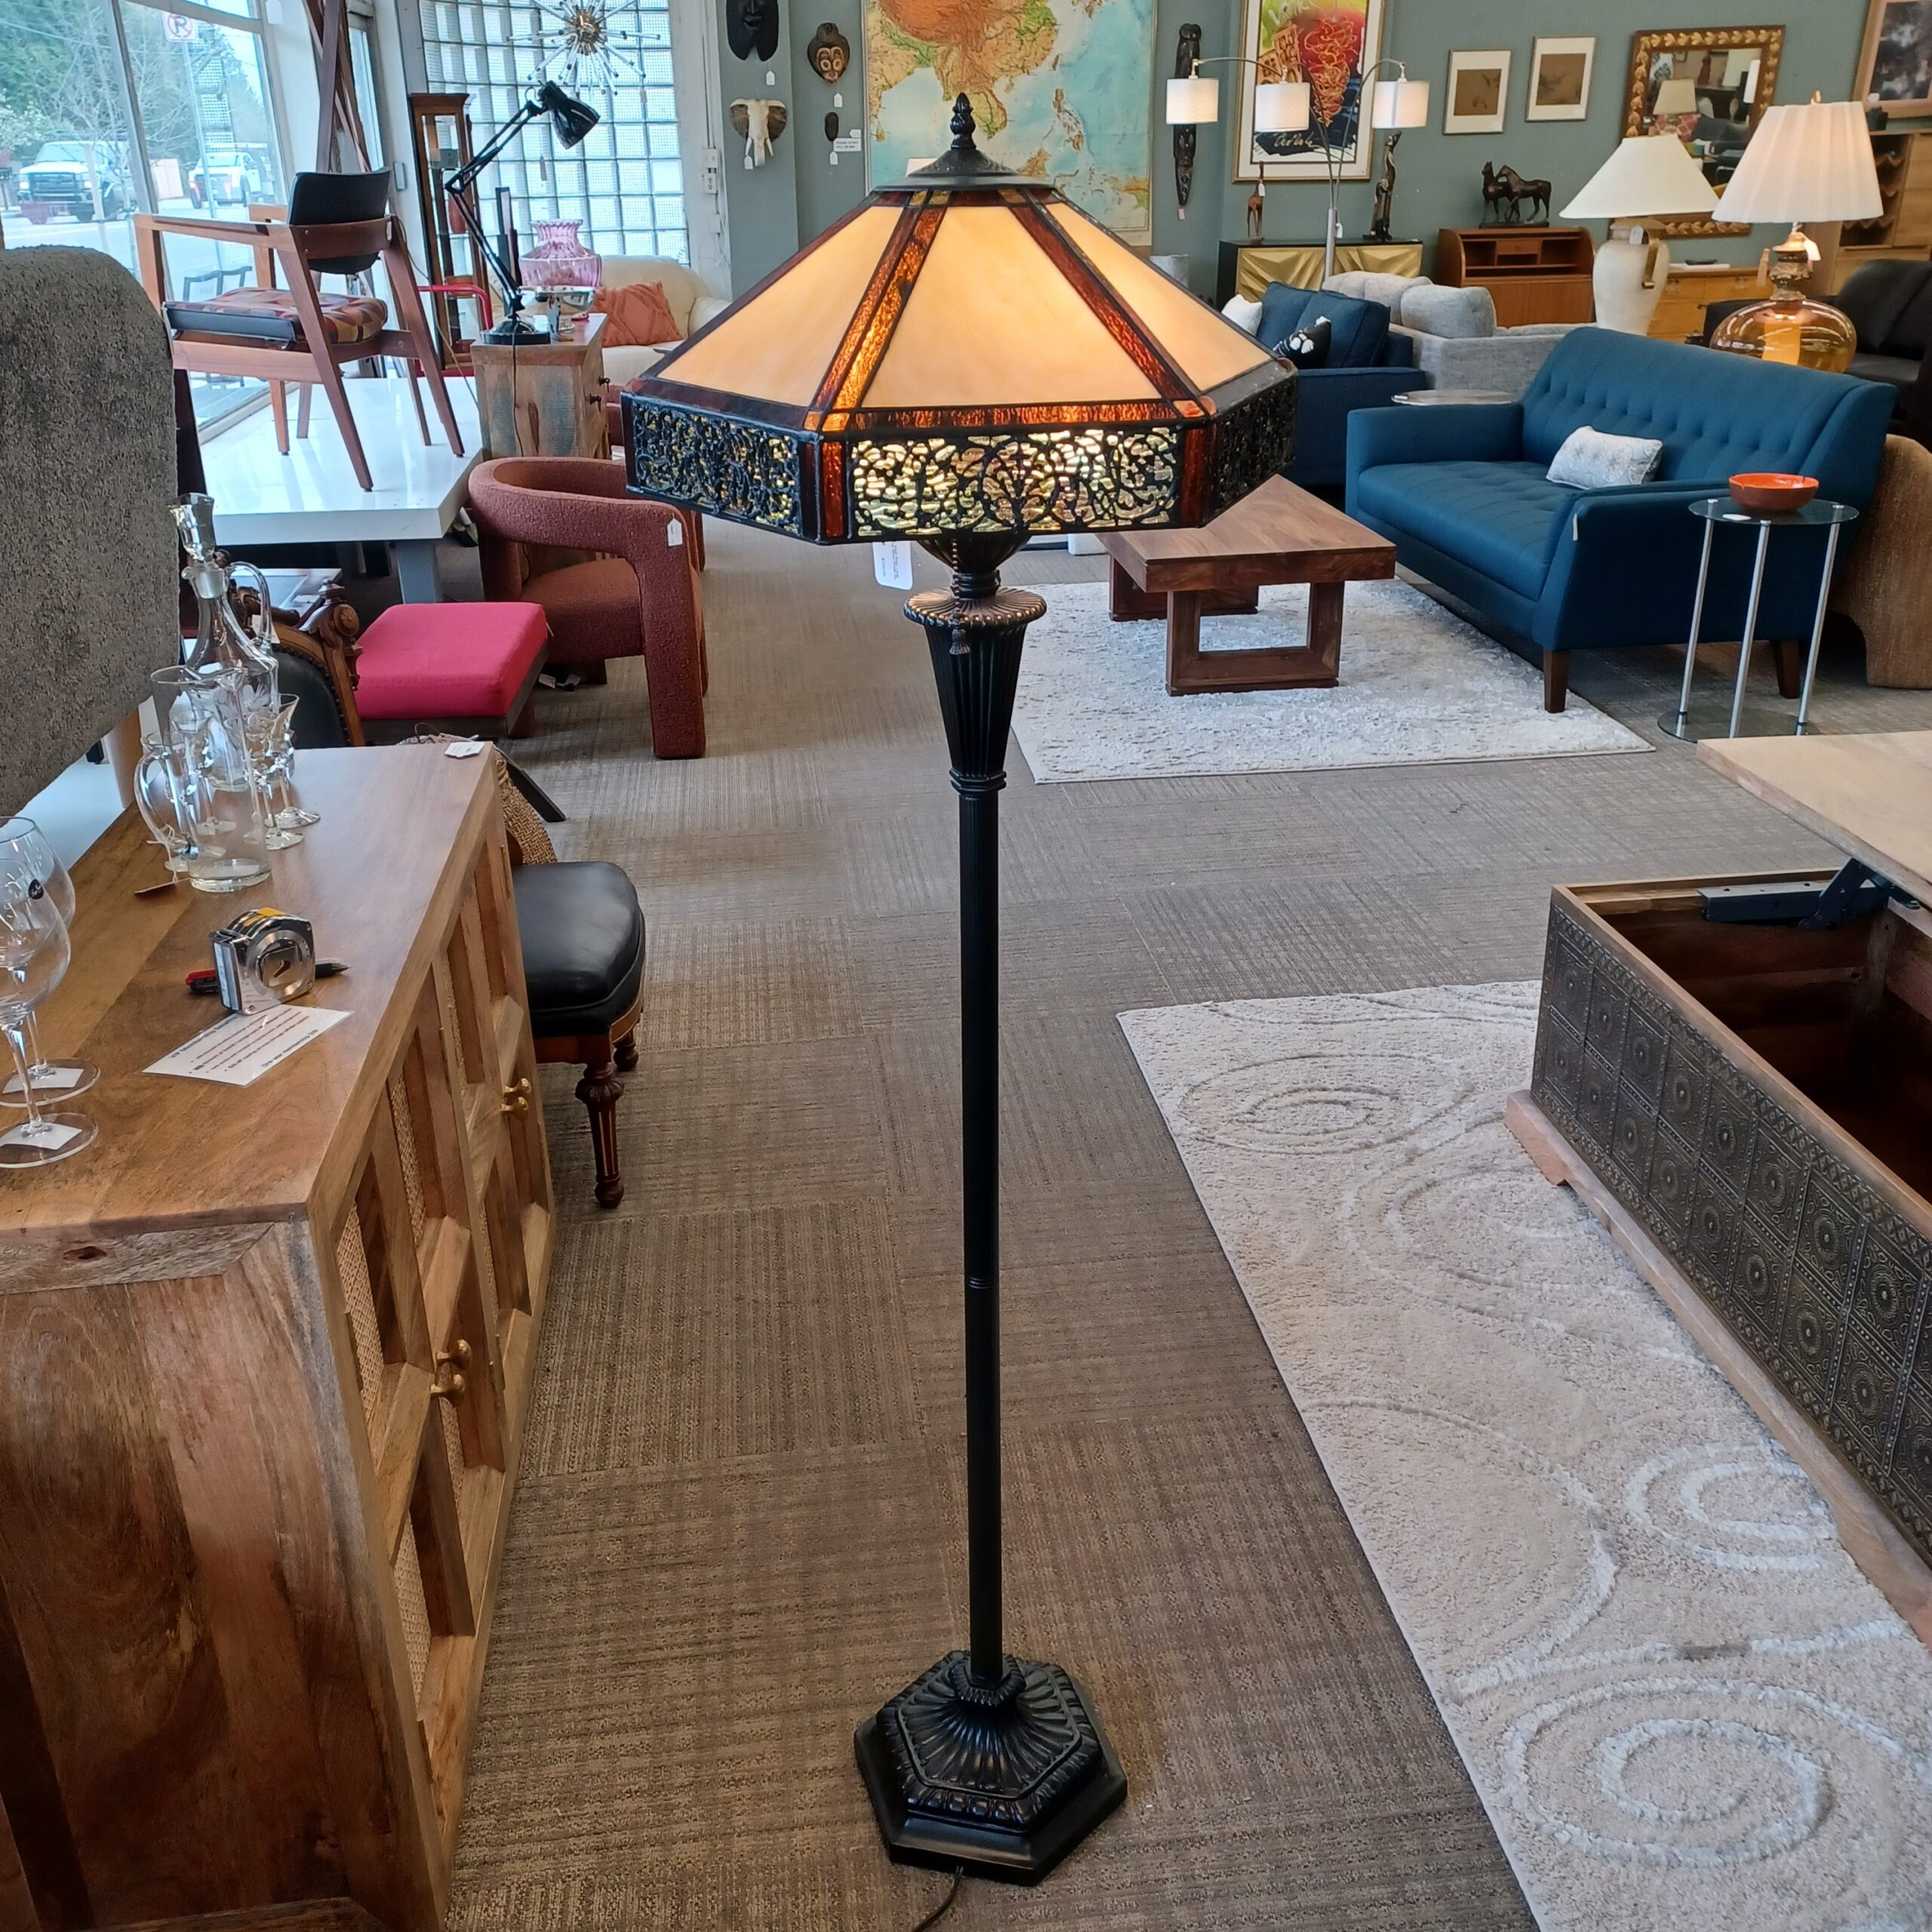 vintage tiffany style floor lamp w/octagonal slag glass shade